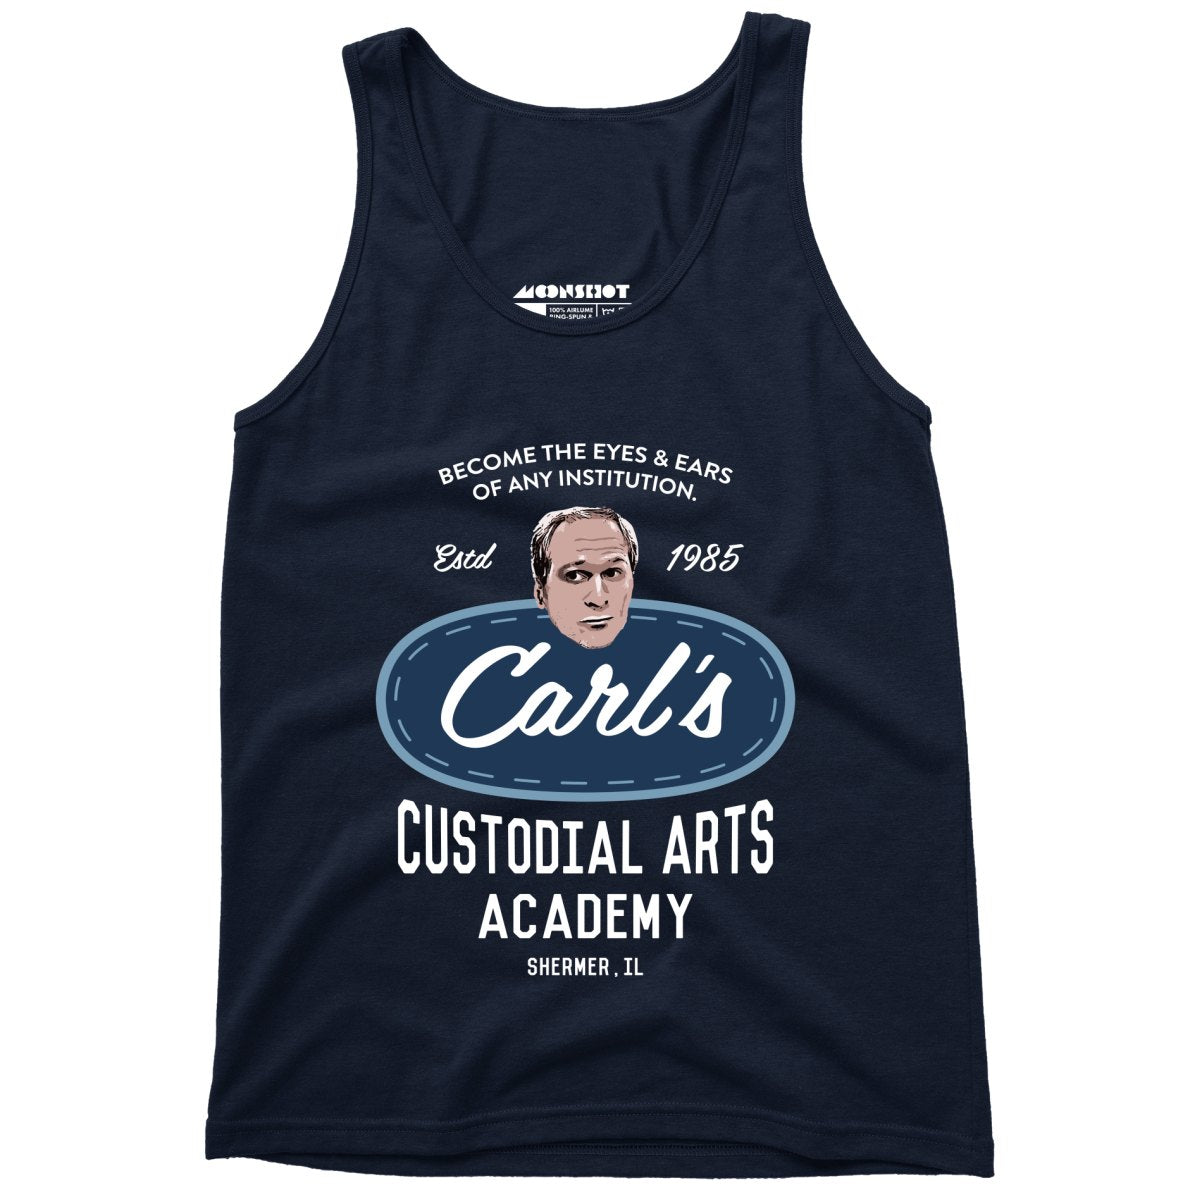 Carl's Custodial Arts Academy - Breakfast Club - Unisex Tank Top